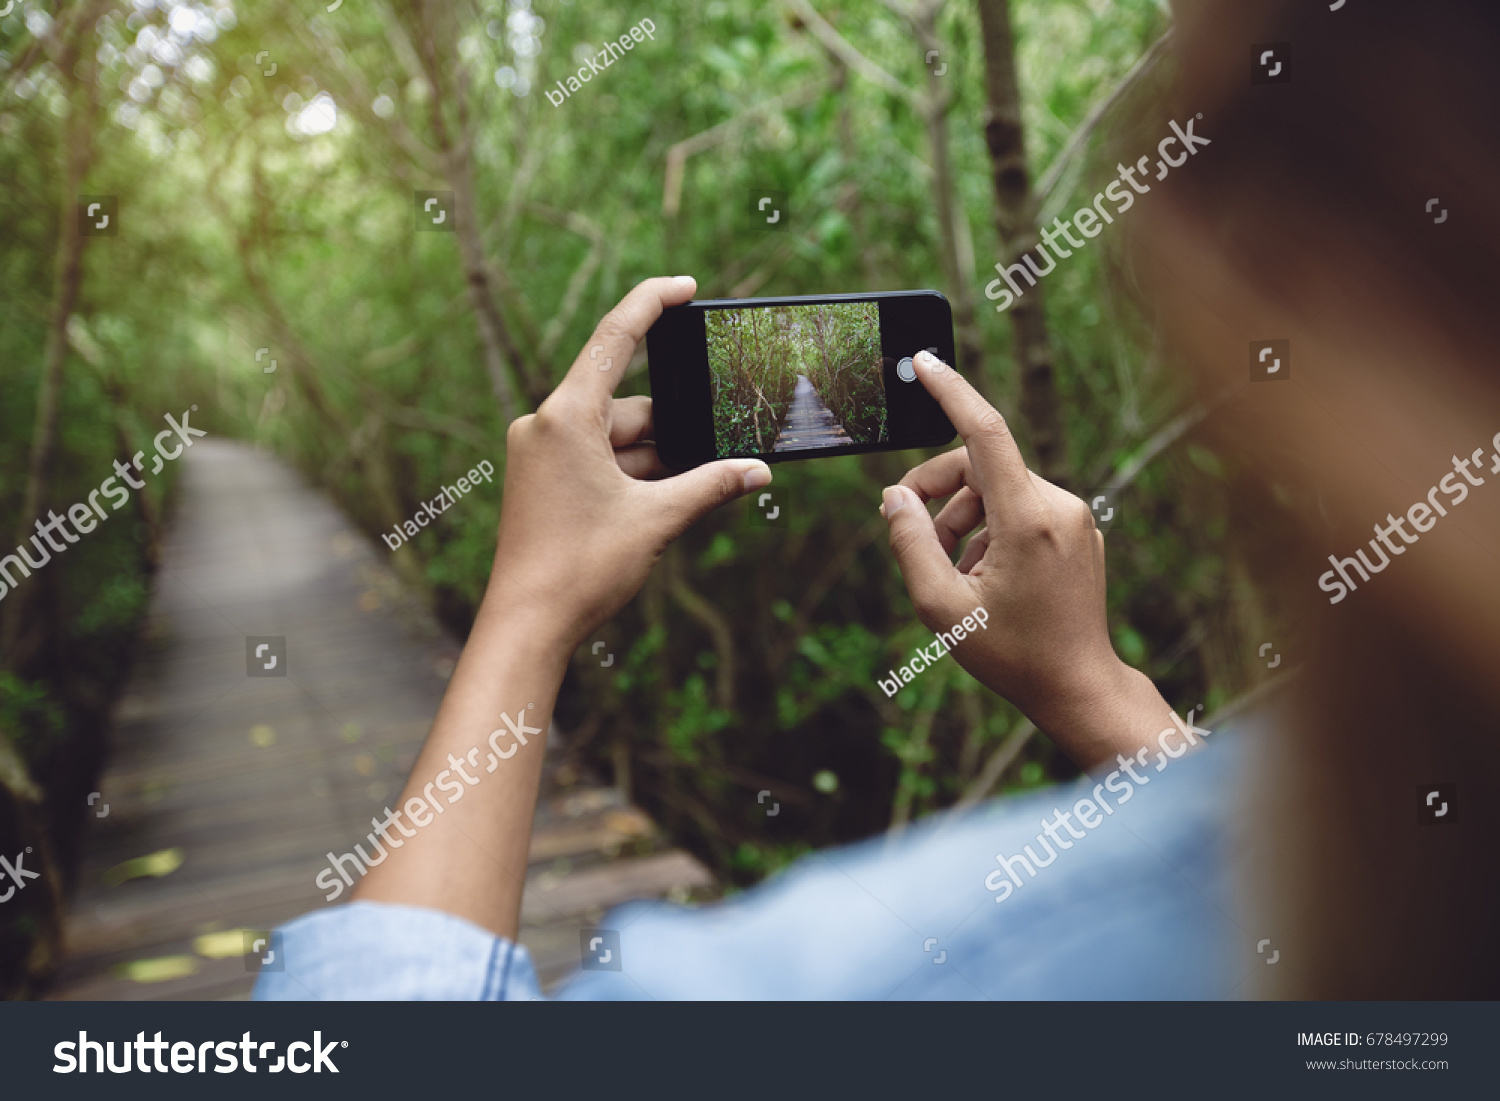 woman use phone taking nature photo #678497299